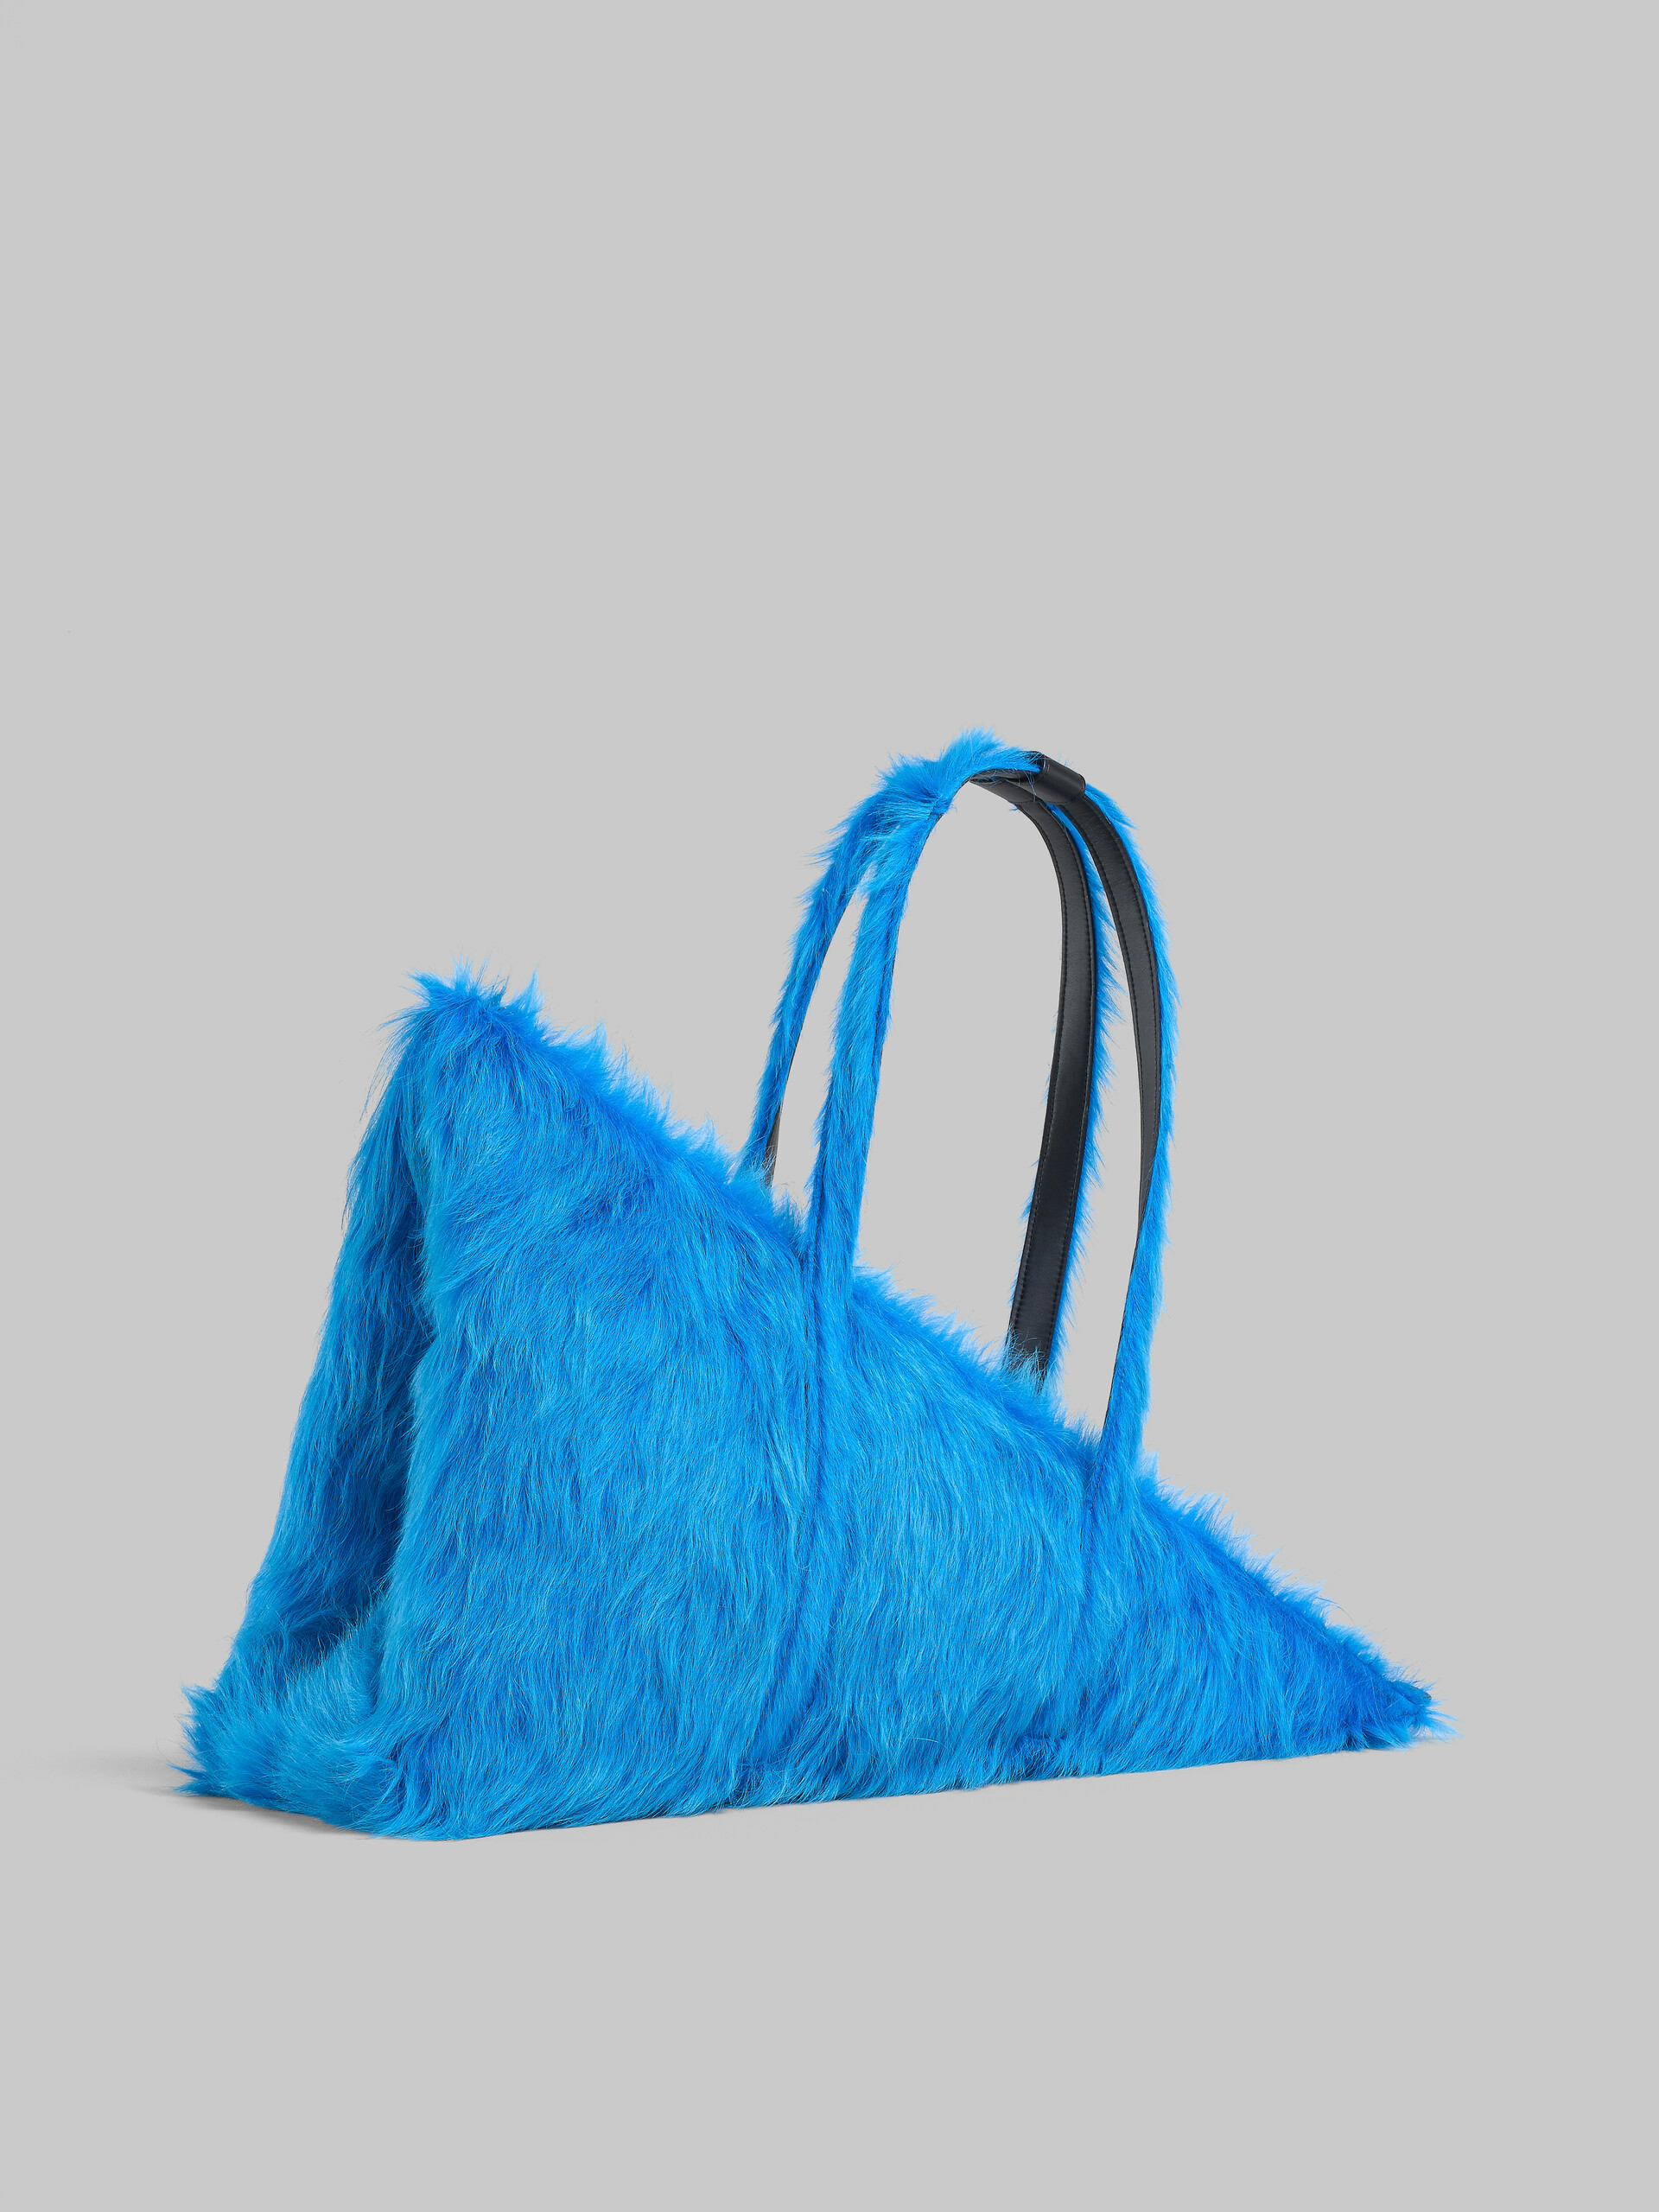 Dreieckige Duffle Bag Prisma aus Kalbsfell in Blau - Reisetasche - Image 6